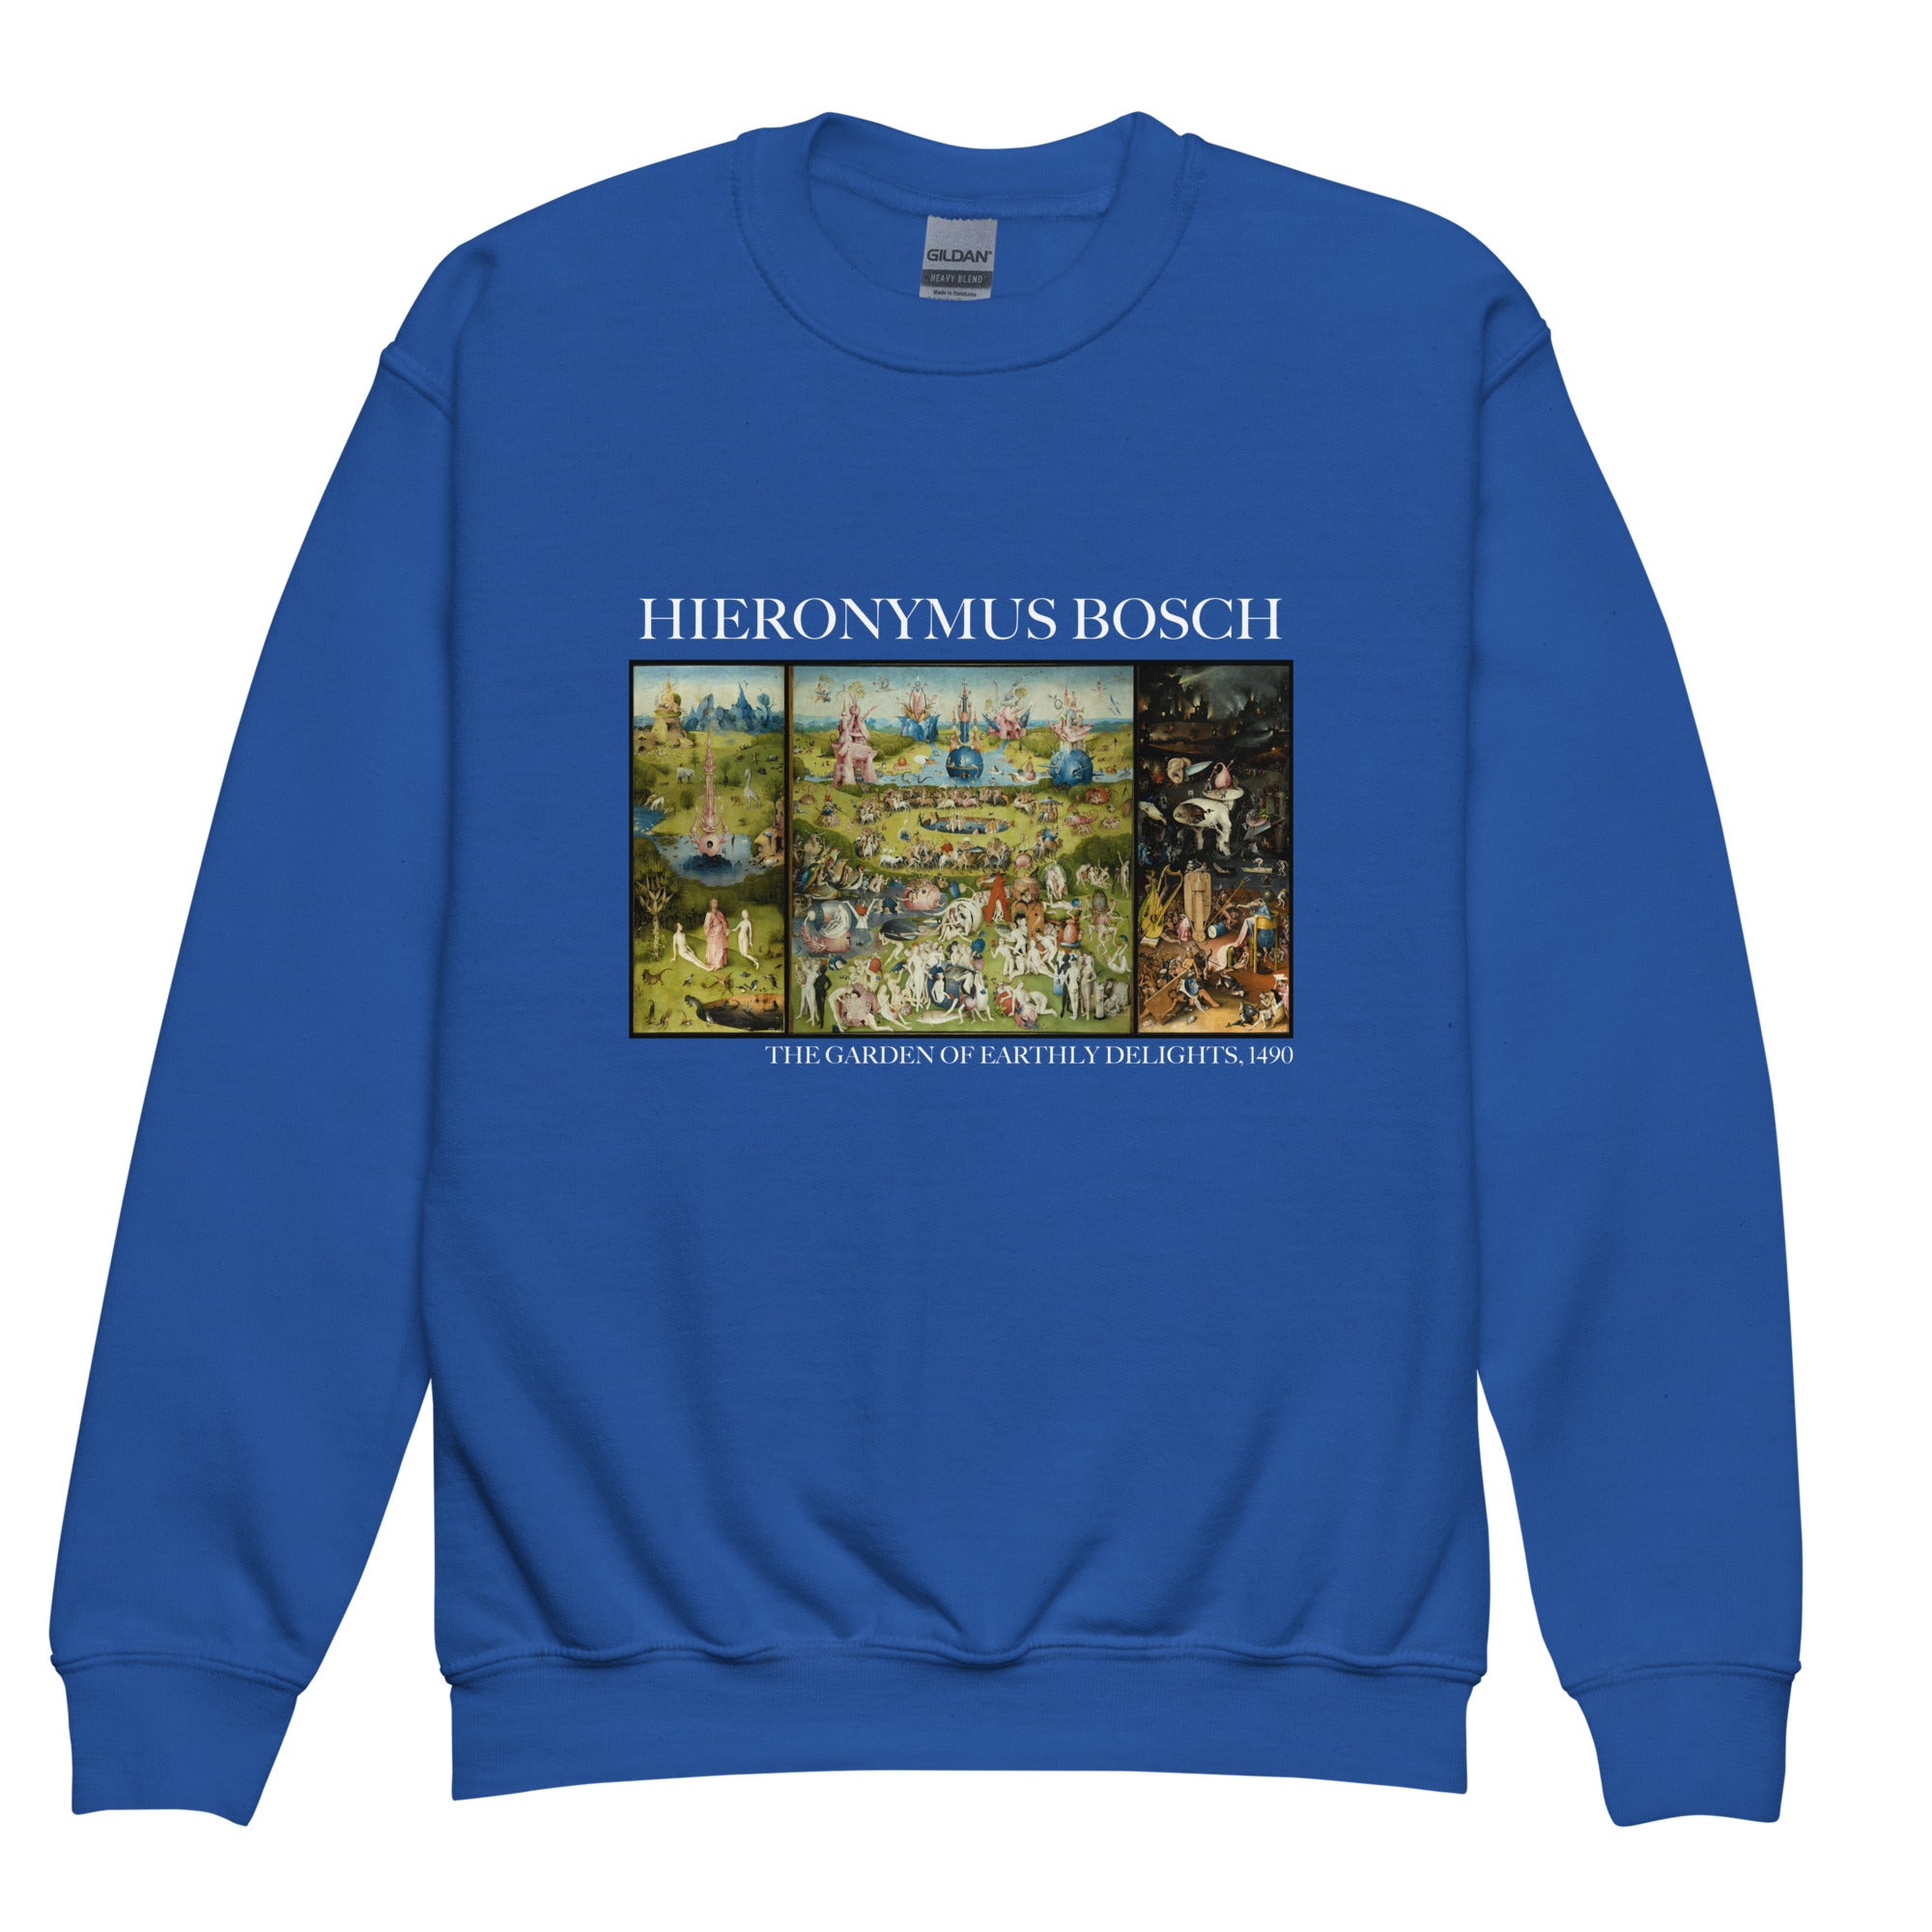 Hieronymus Bosch 'The Garden of Earthly Delights' Famous Painting Crewneck Sweatshirt | Premium Youth Art Sweatshirt